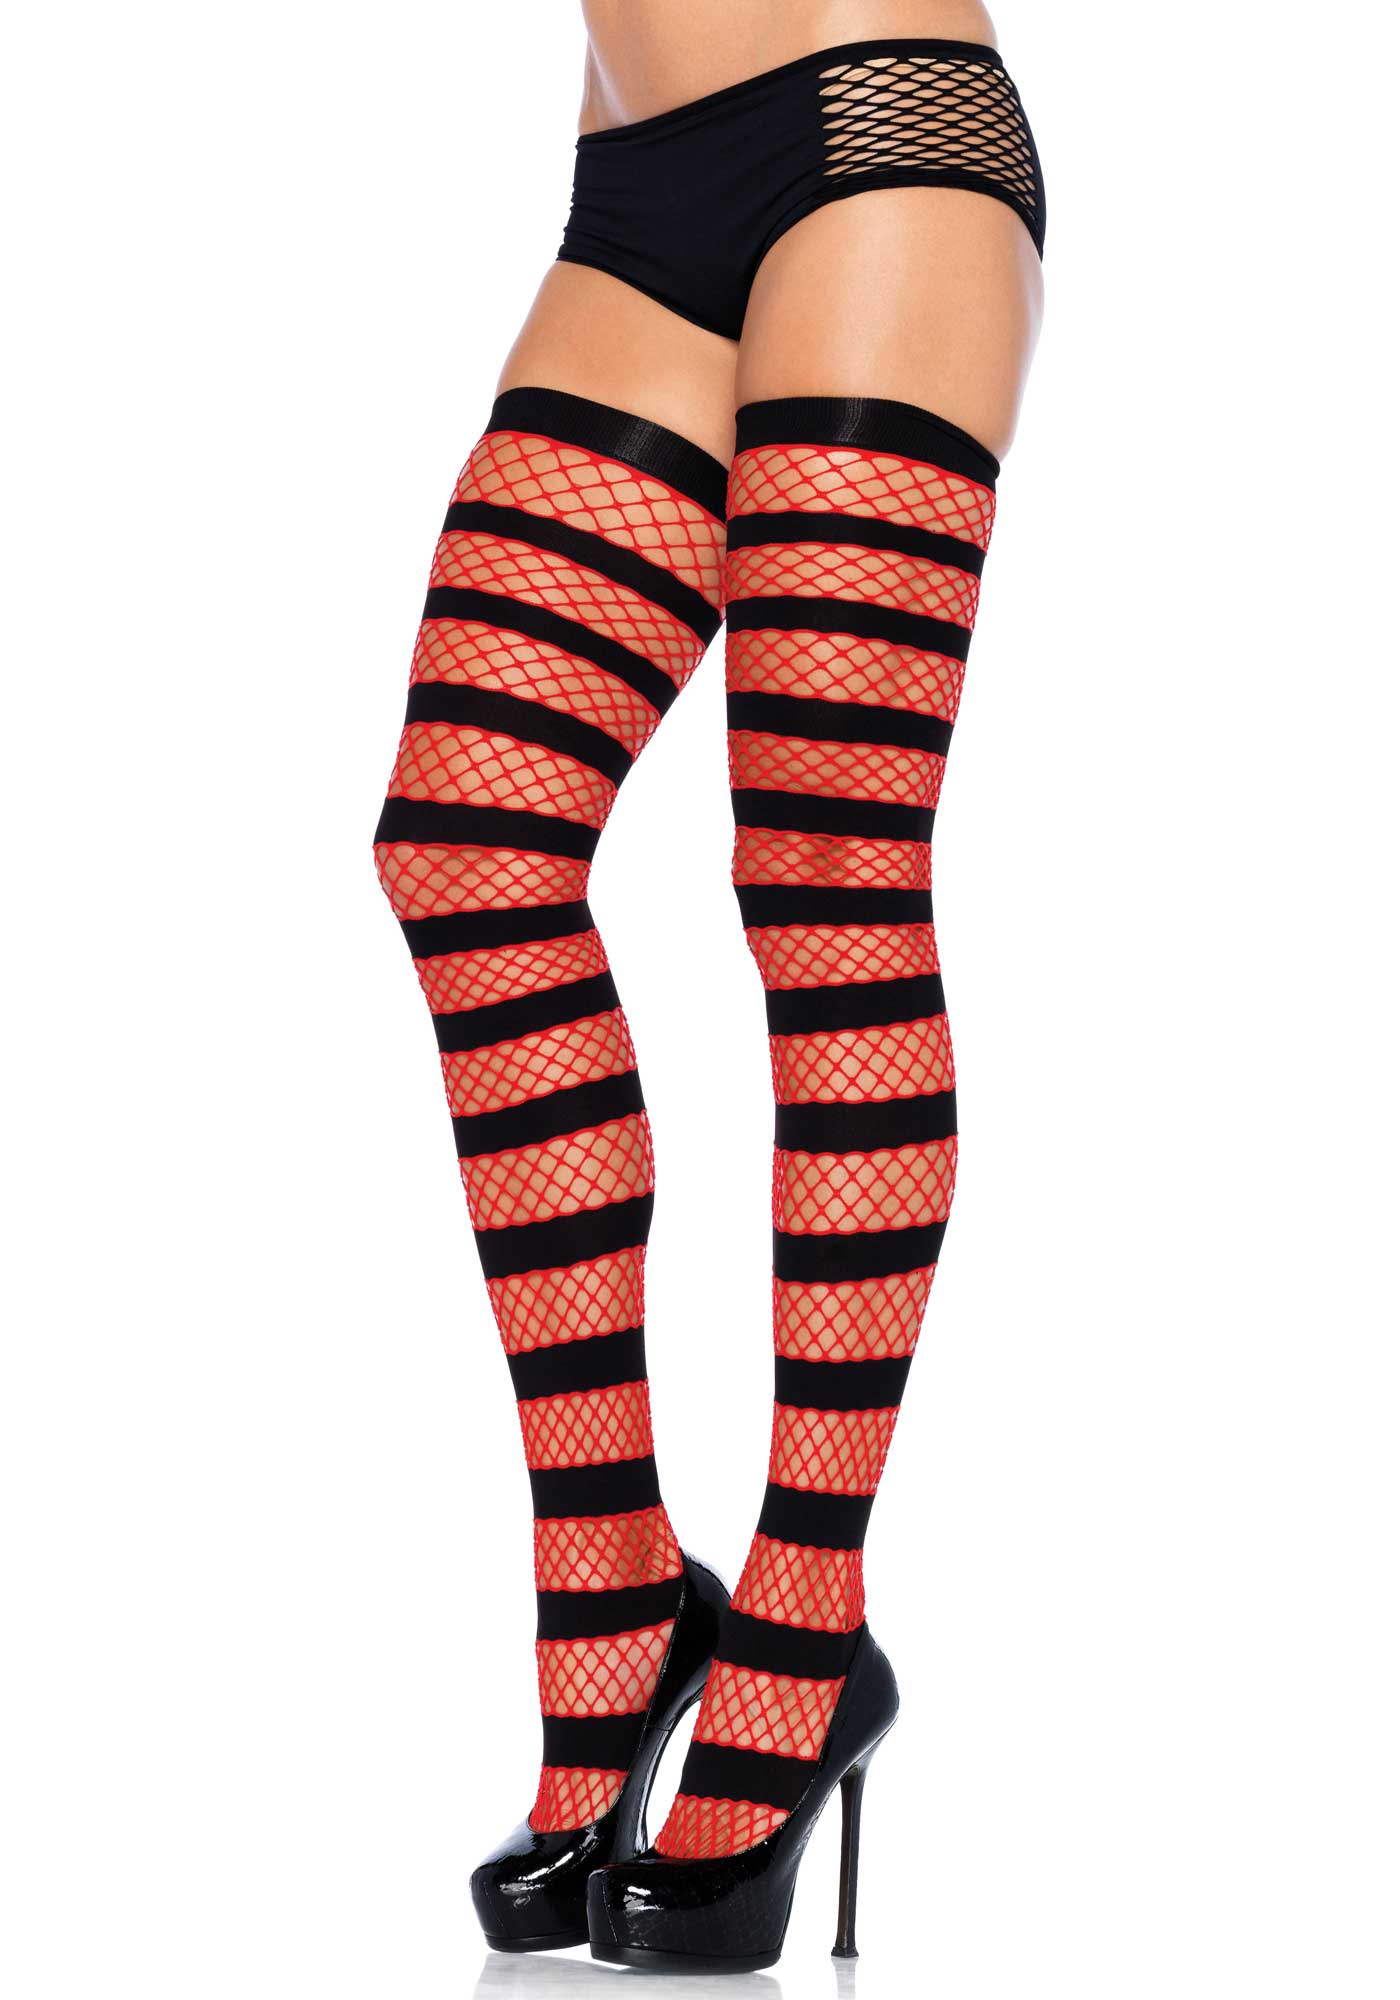 Striped Fishnet Stockings Black Red